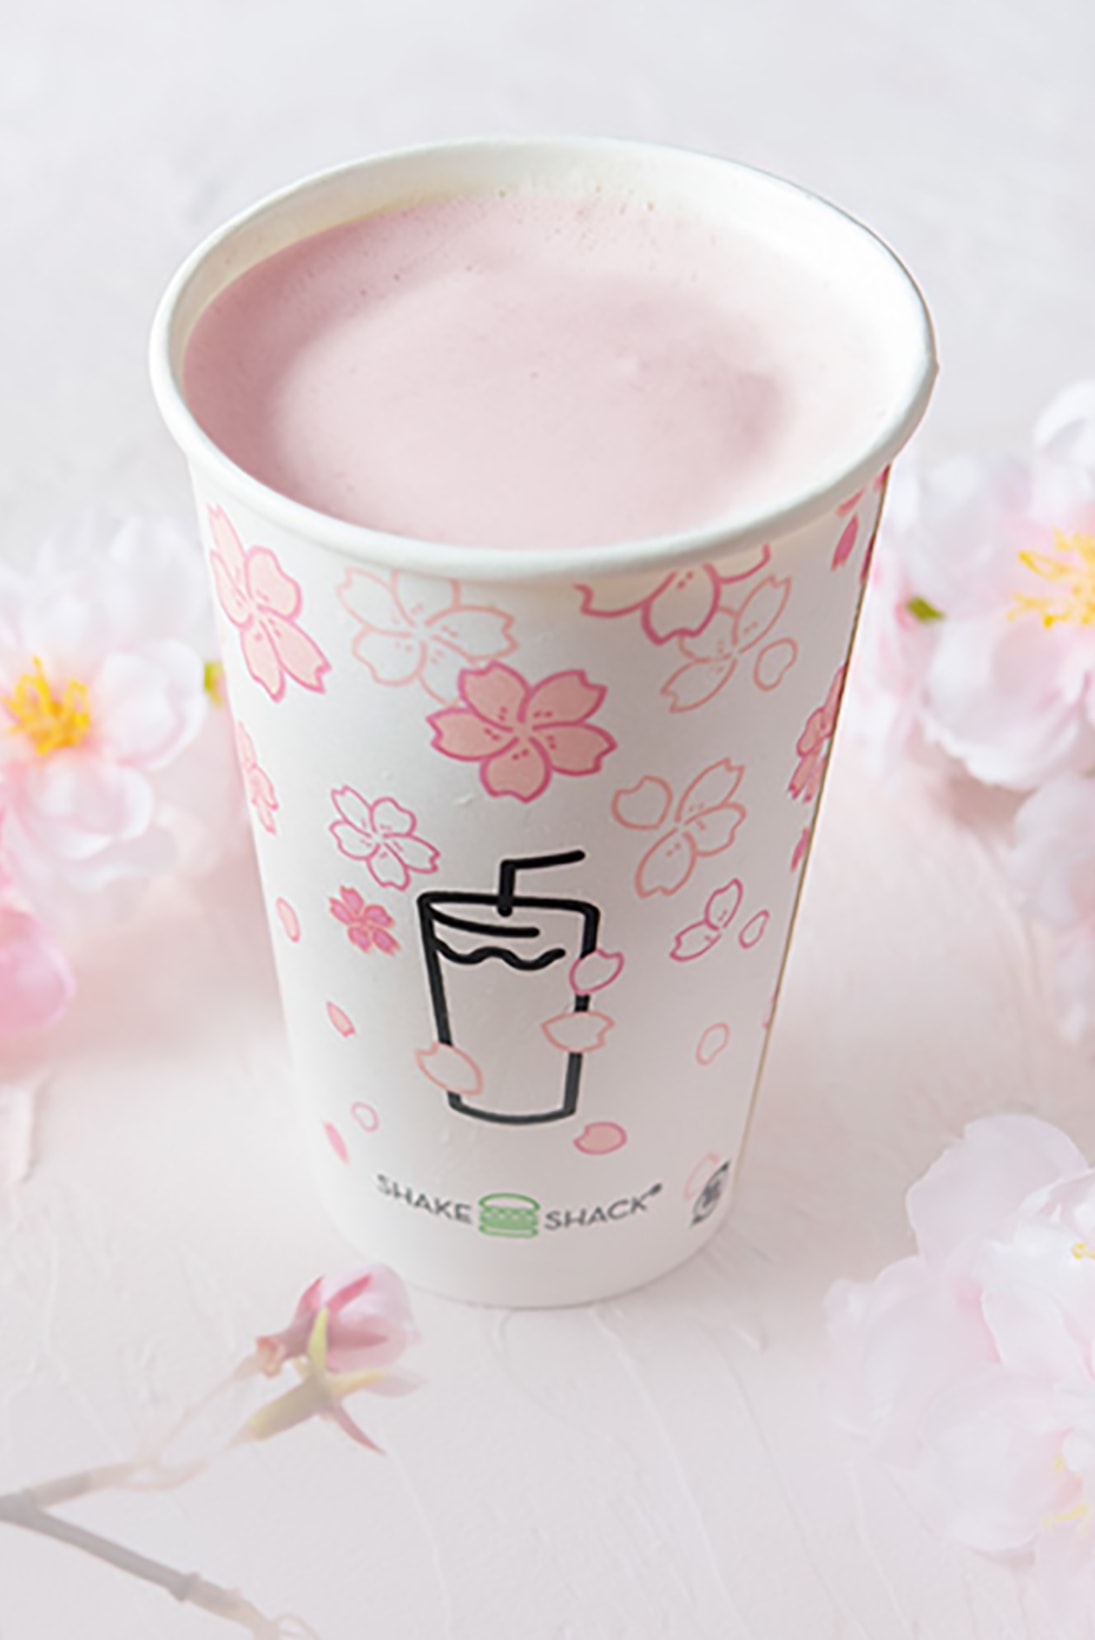 shake shack japan sakura cherry blossom drinks shack-ura pink